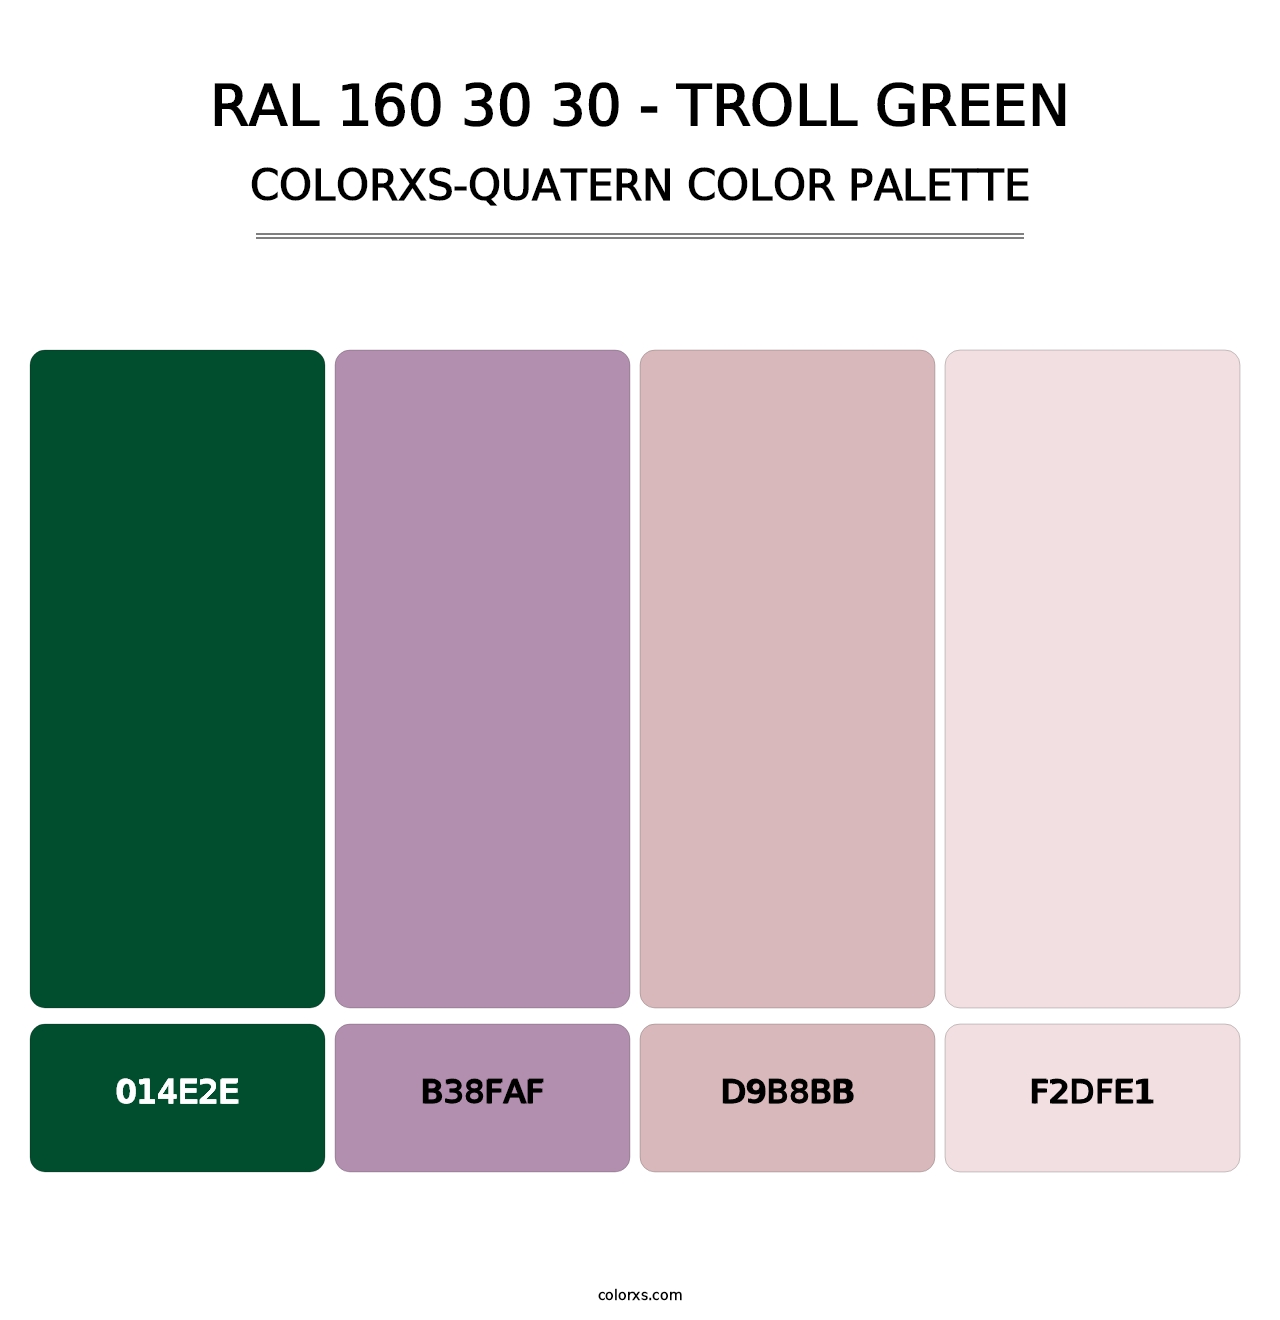 RAL 160 30 30 - Troll Green - Colorxs Quatern Palette